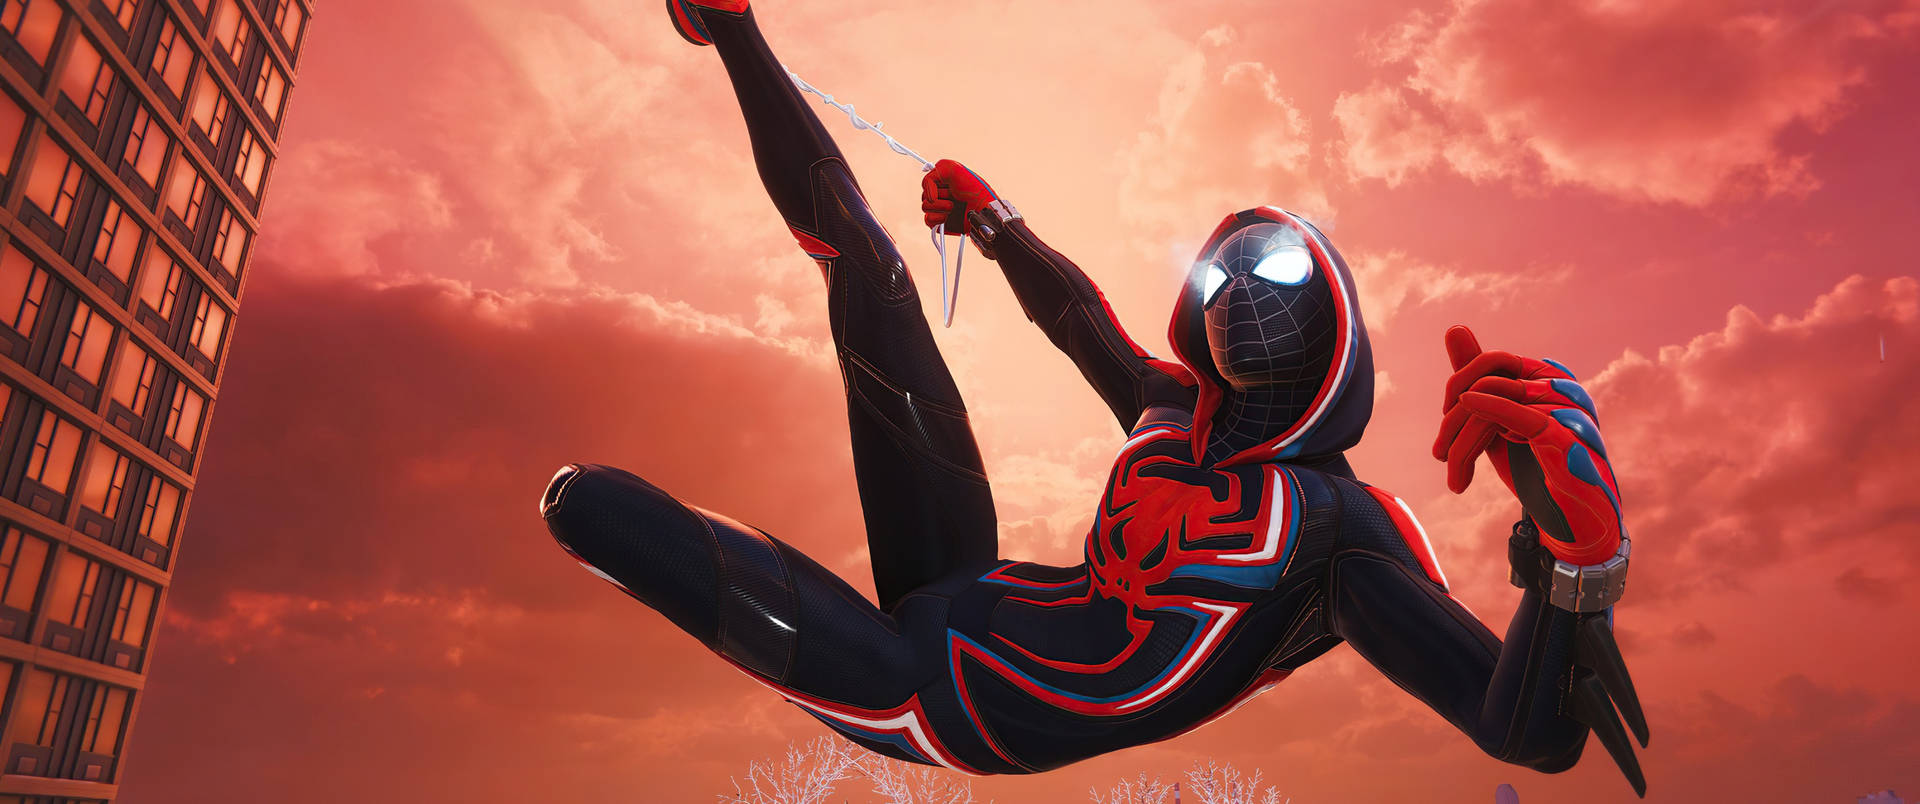 Spider Man Miles Morales Jumping Ps5 Wallpaper